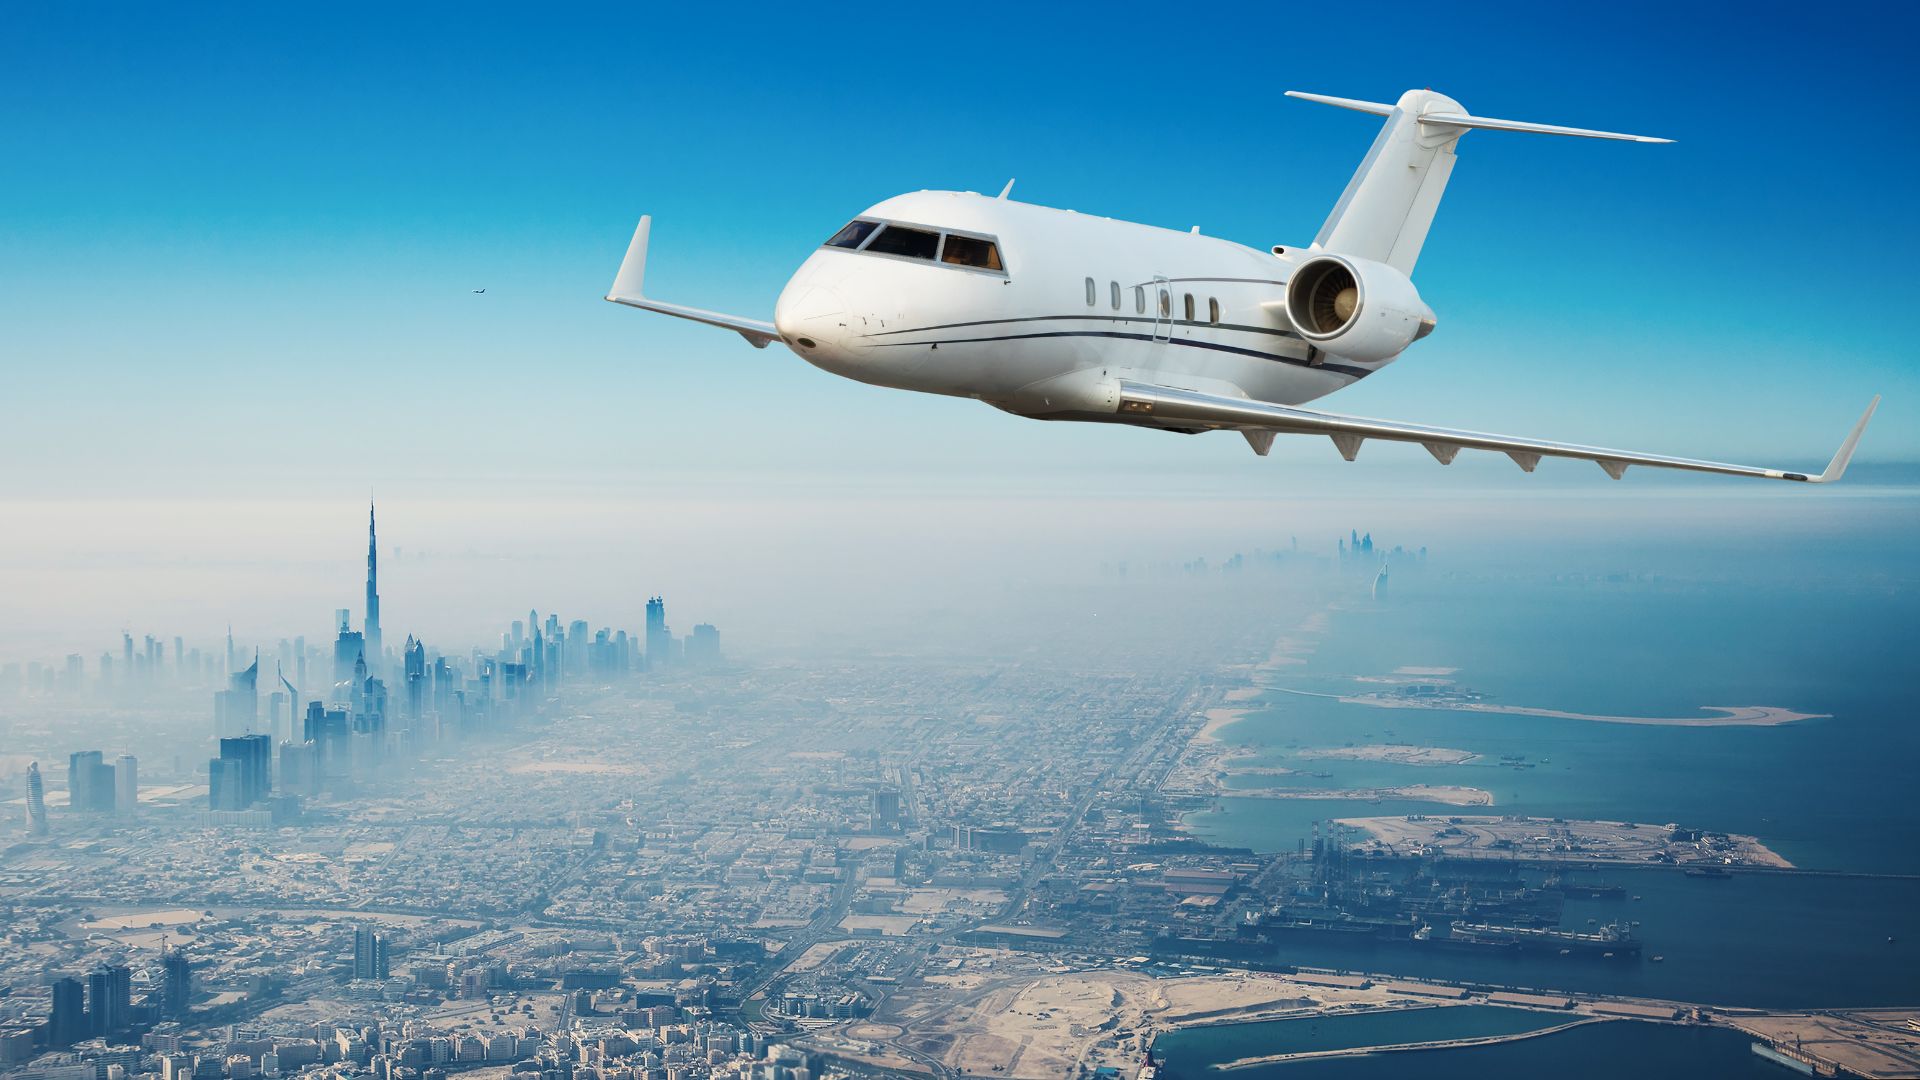 Top 10 Private Jet Destinations for Elite Travelers